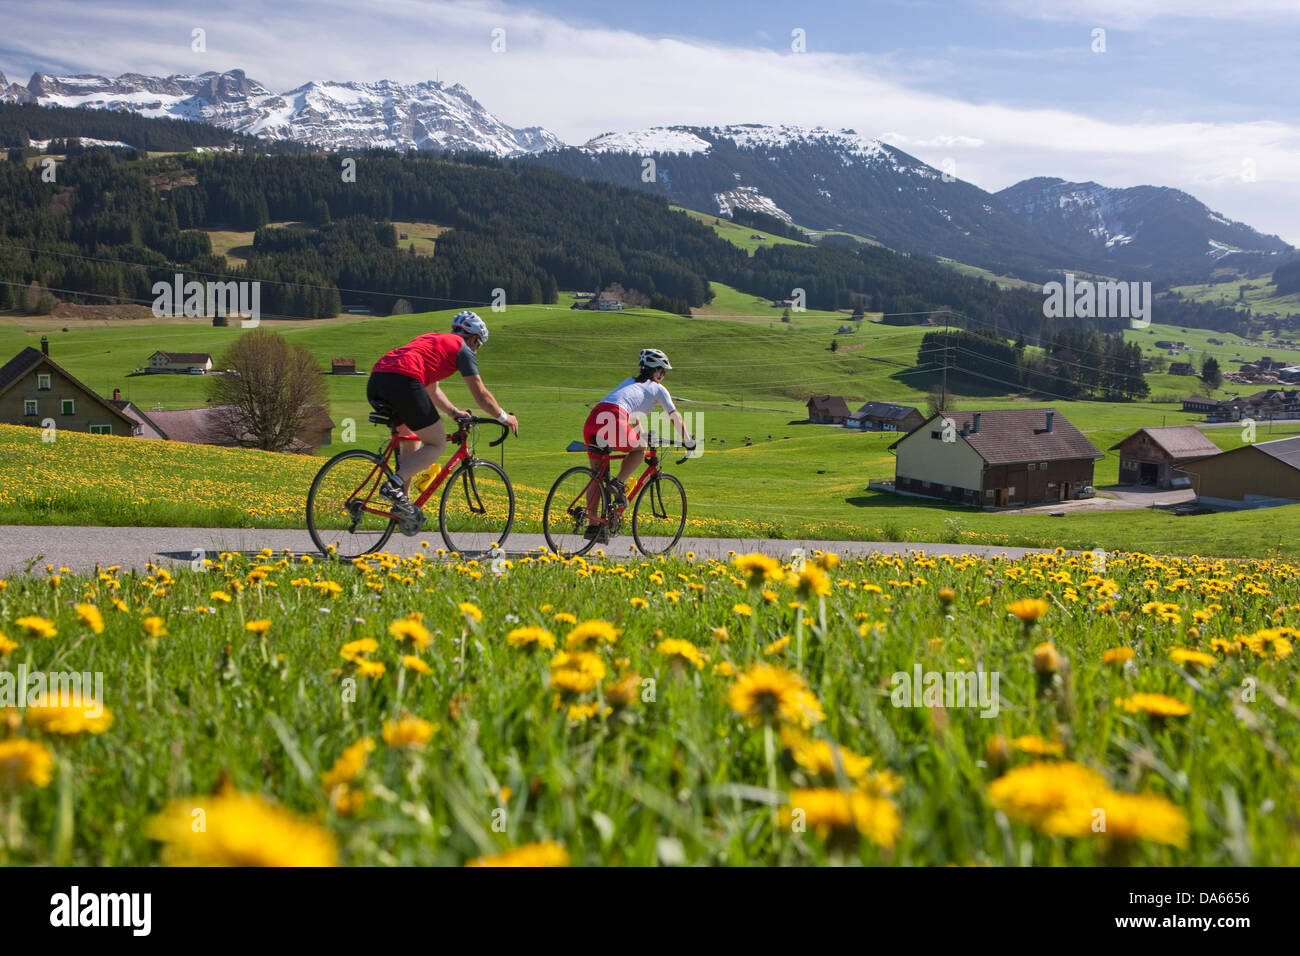 Cycliste, Motard, Appenzell, printemps, location, vélos, vélo, équitation, vélo, canton d'Appenzell, l'Alpstein, Sänt Innerroden, Banque D'Images